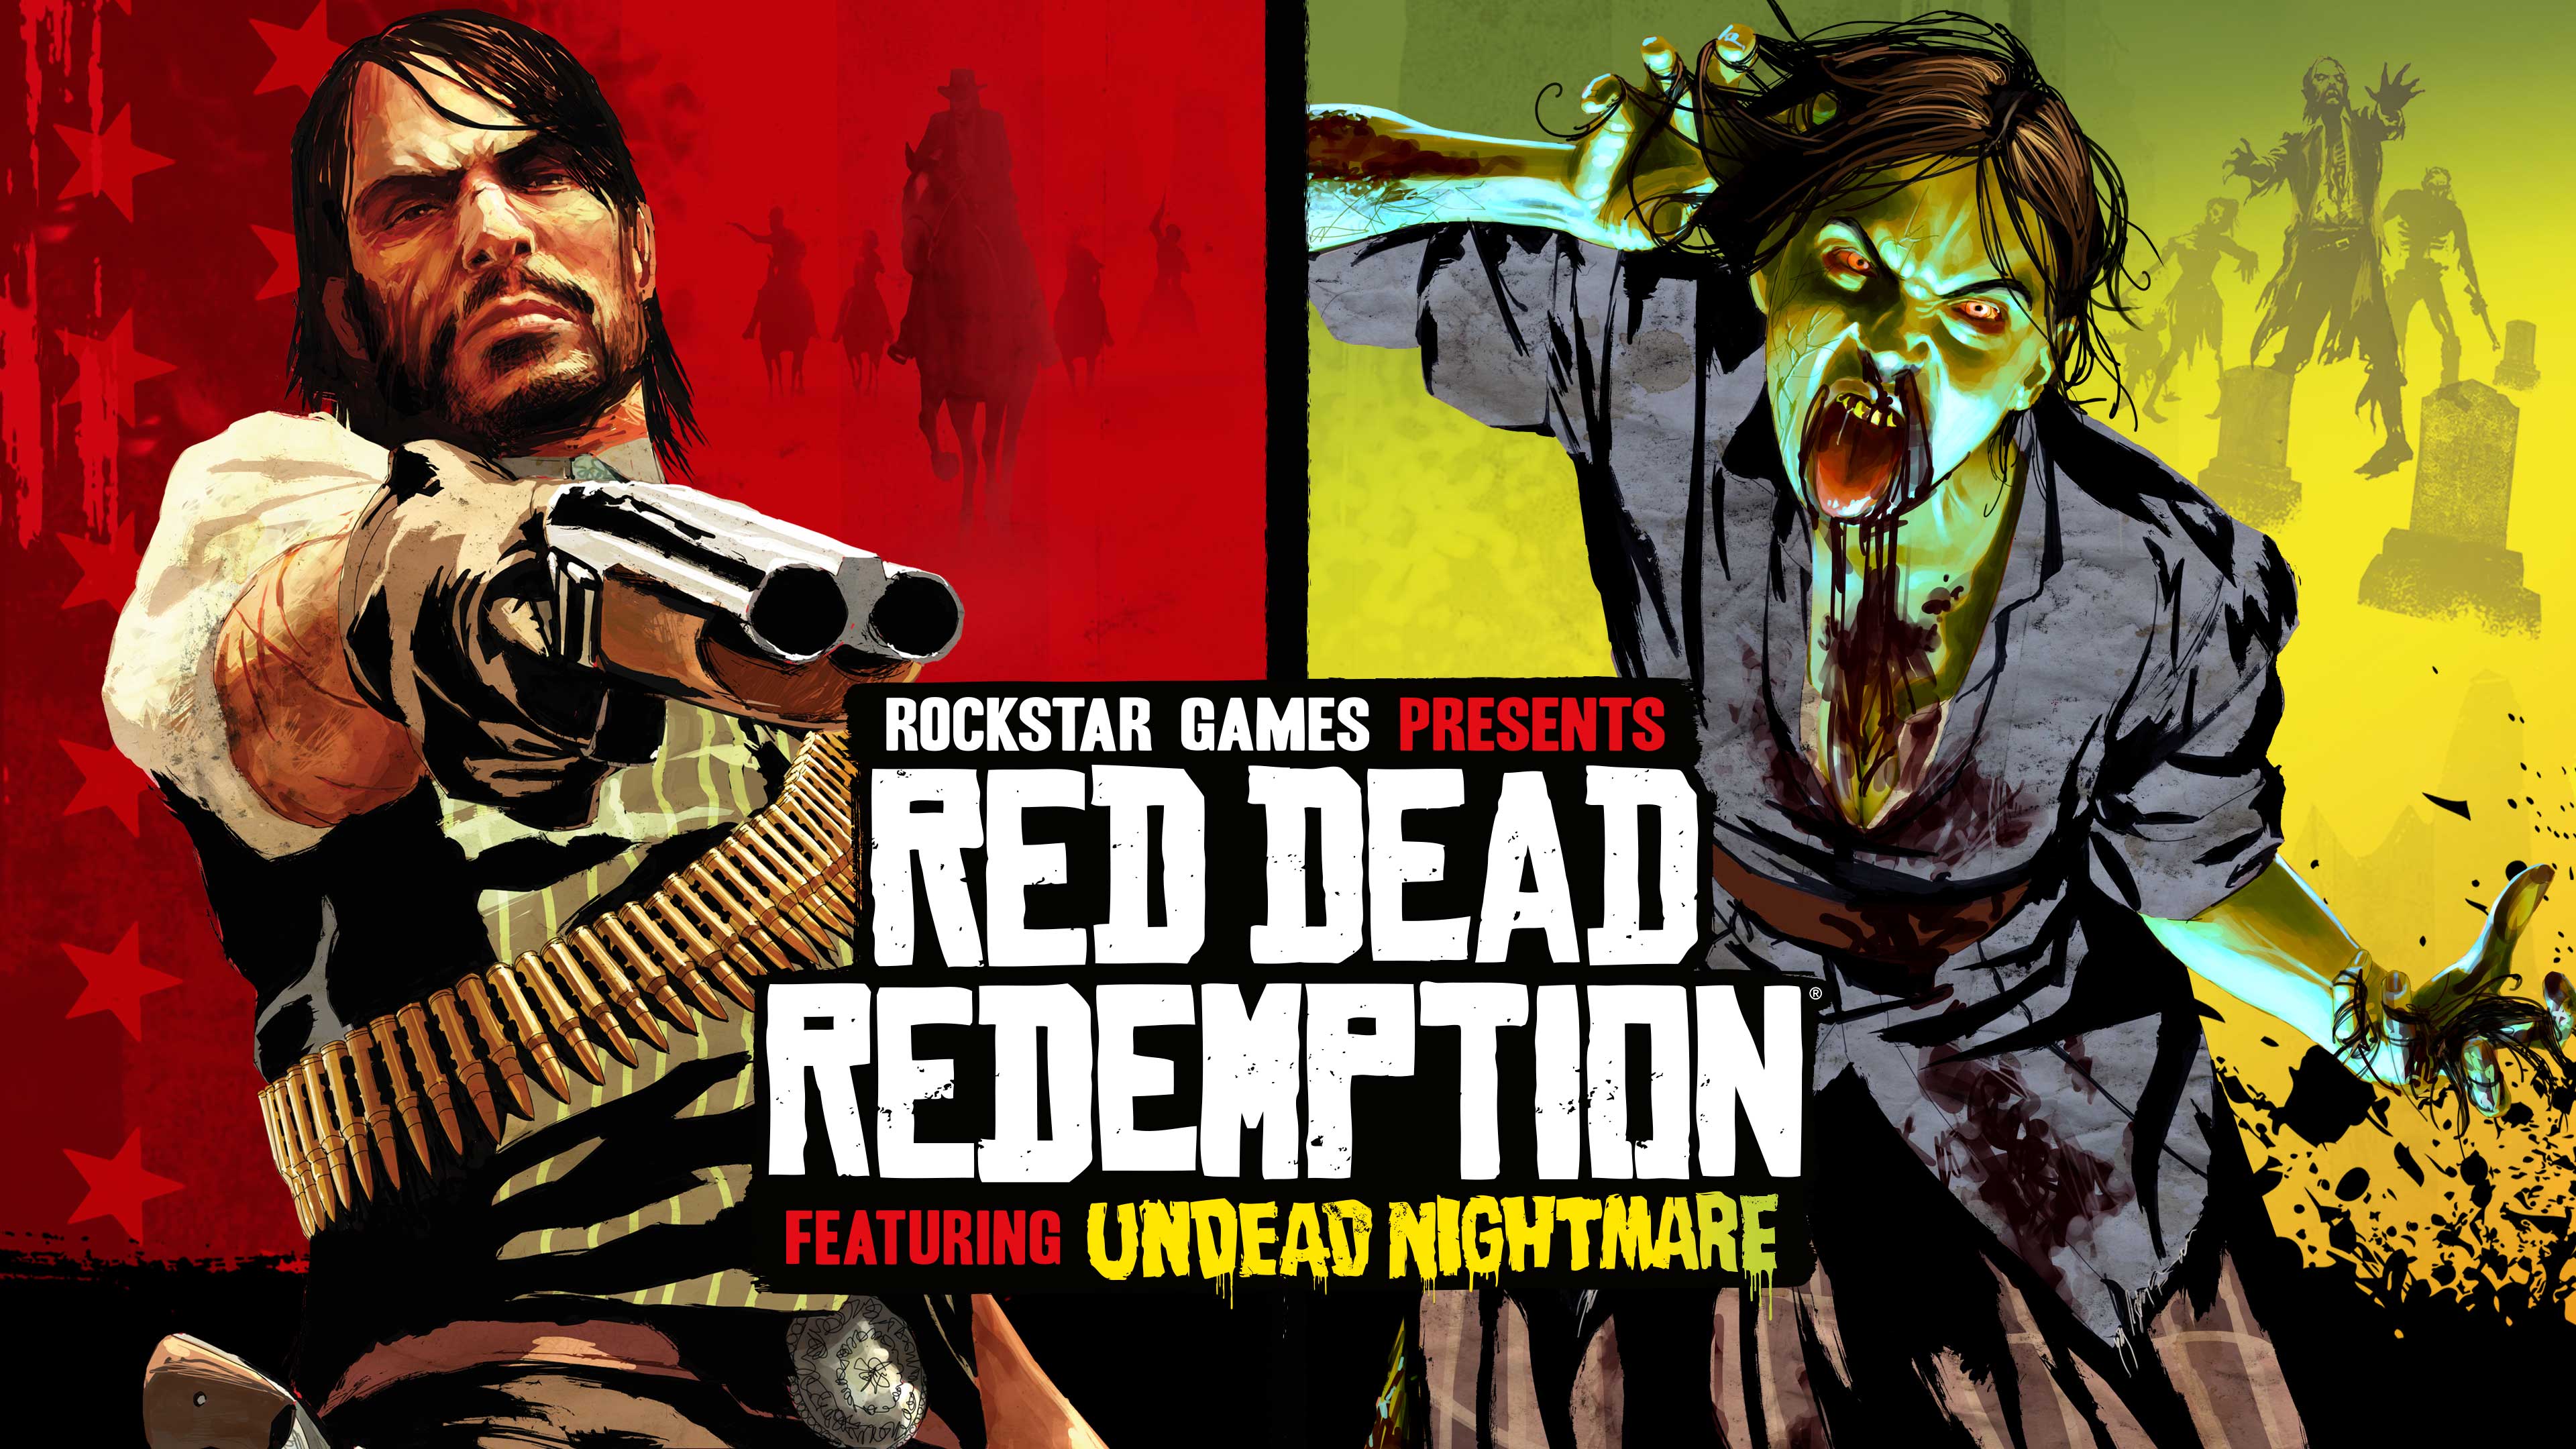 Red Dead Redemption Nintendo Switch Jogo Mídia Física Novo